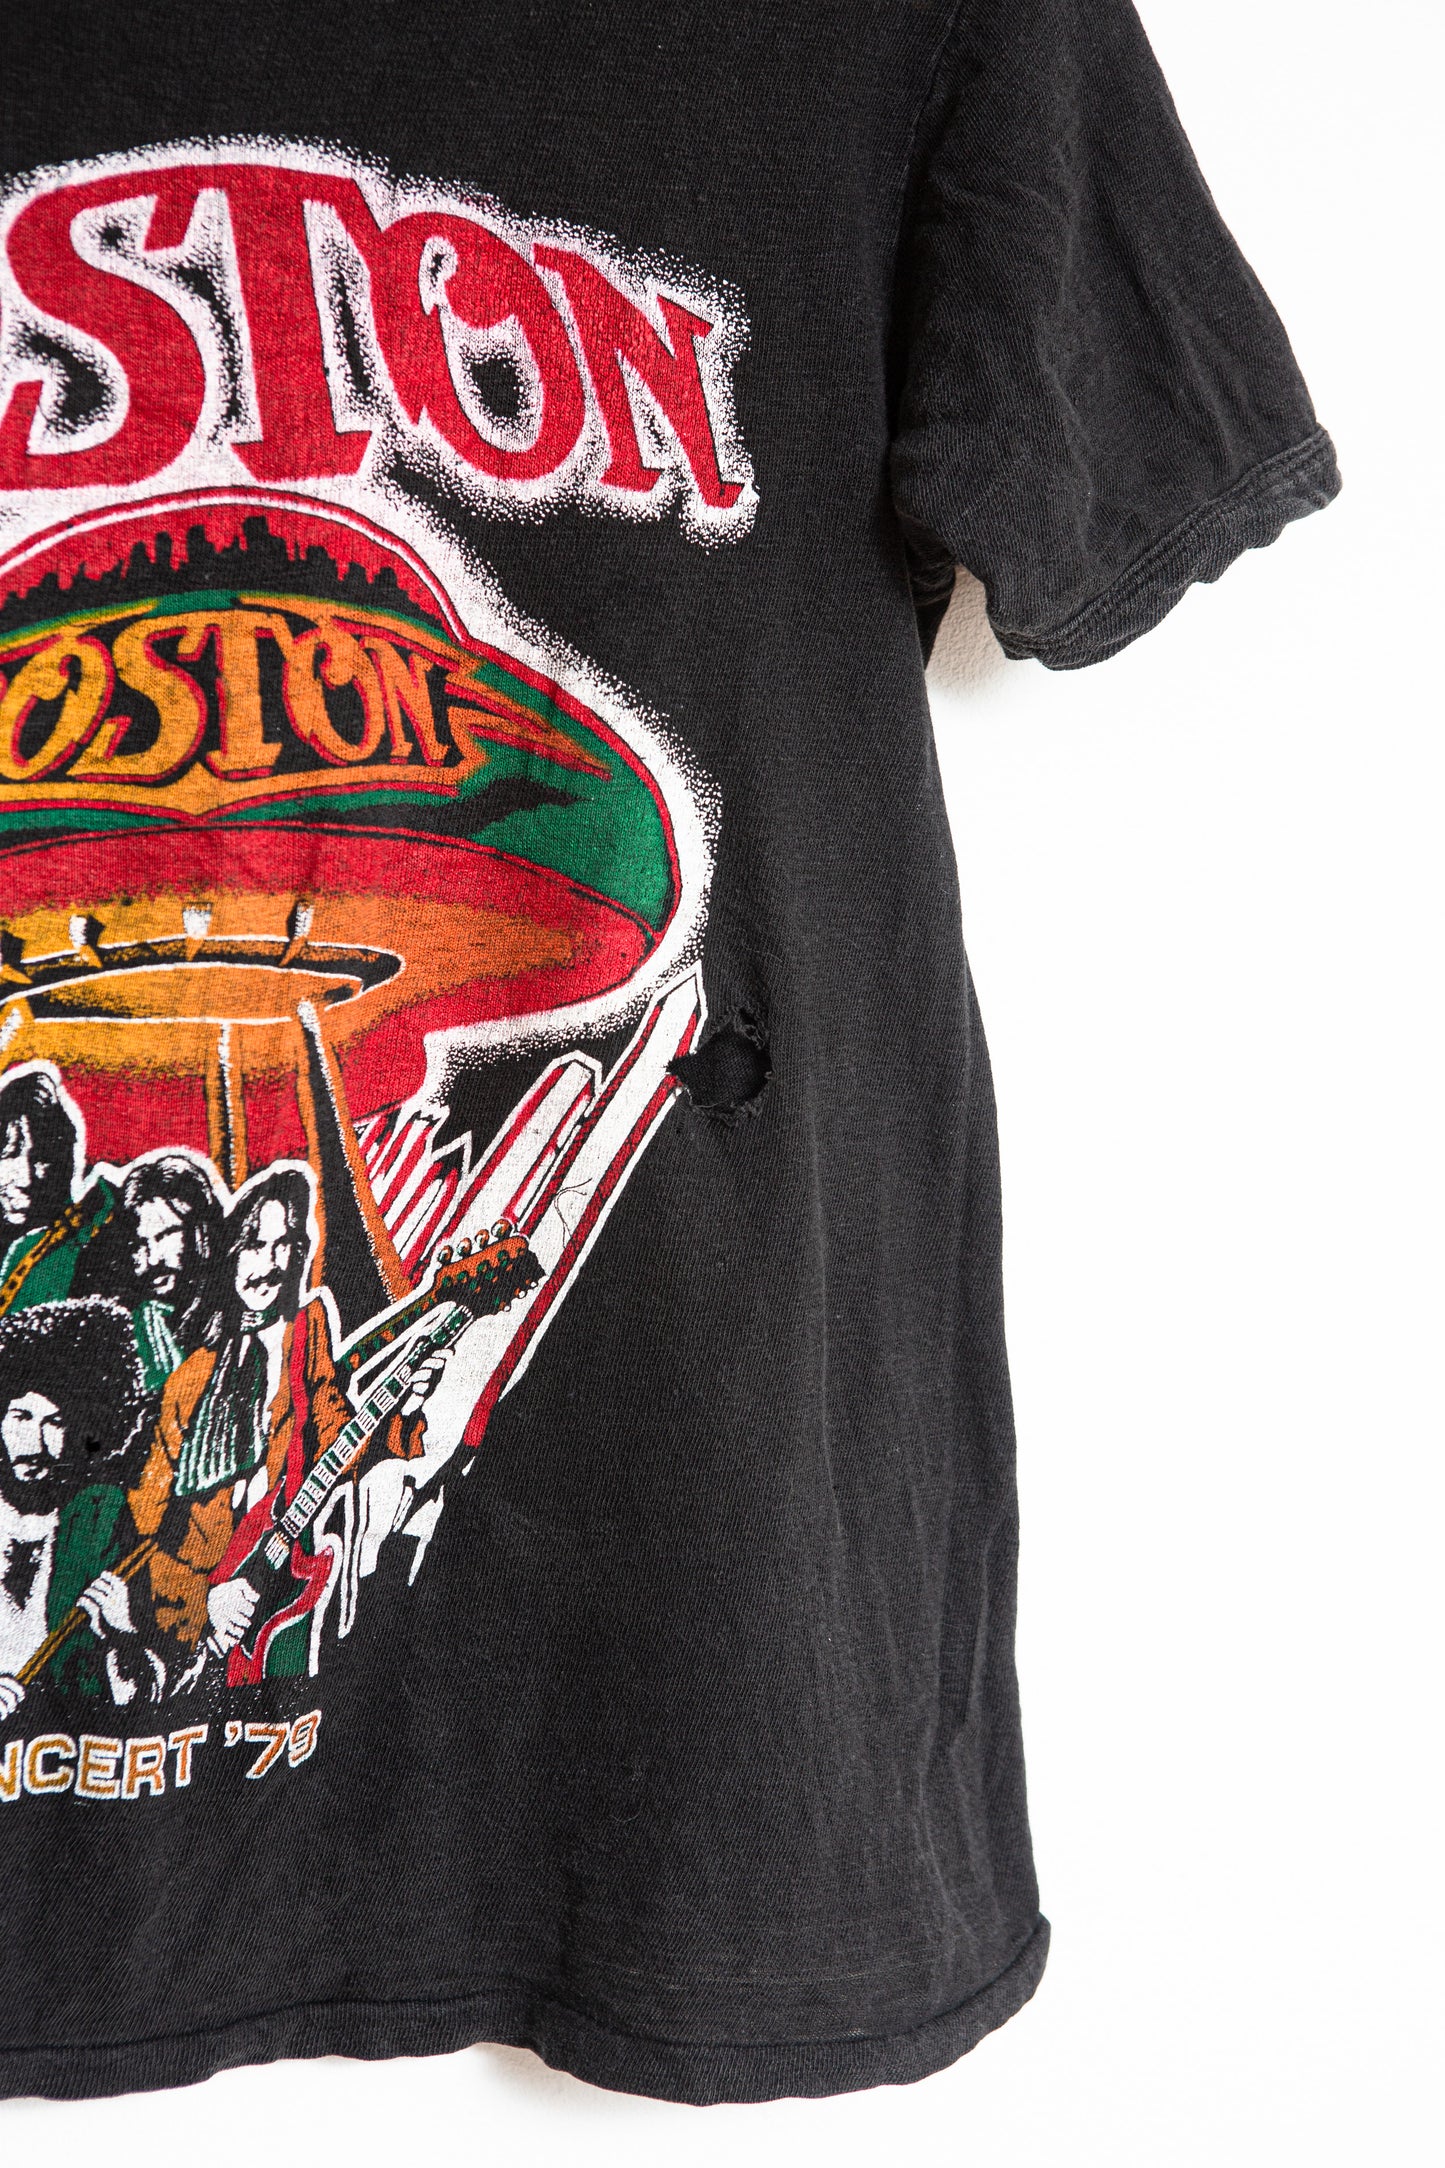 1979 Boston Concert T-shirt XS